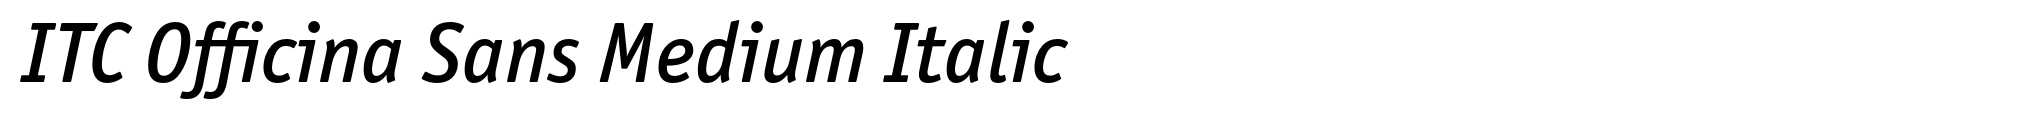 ITC Officina Sans Medium Italic image